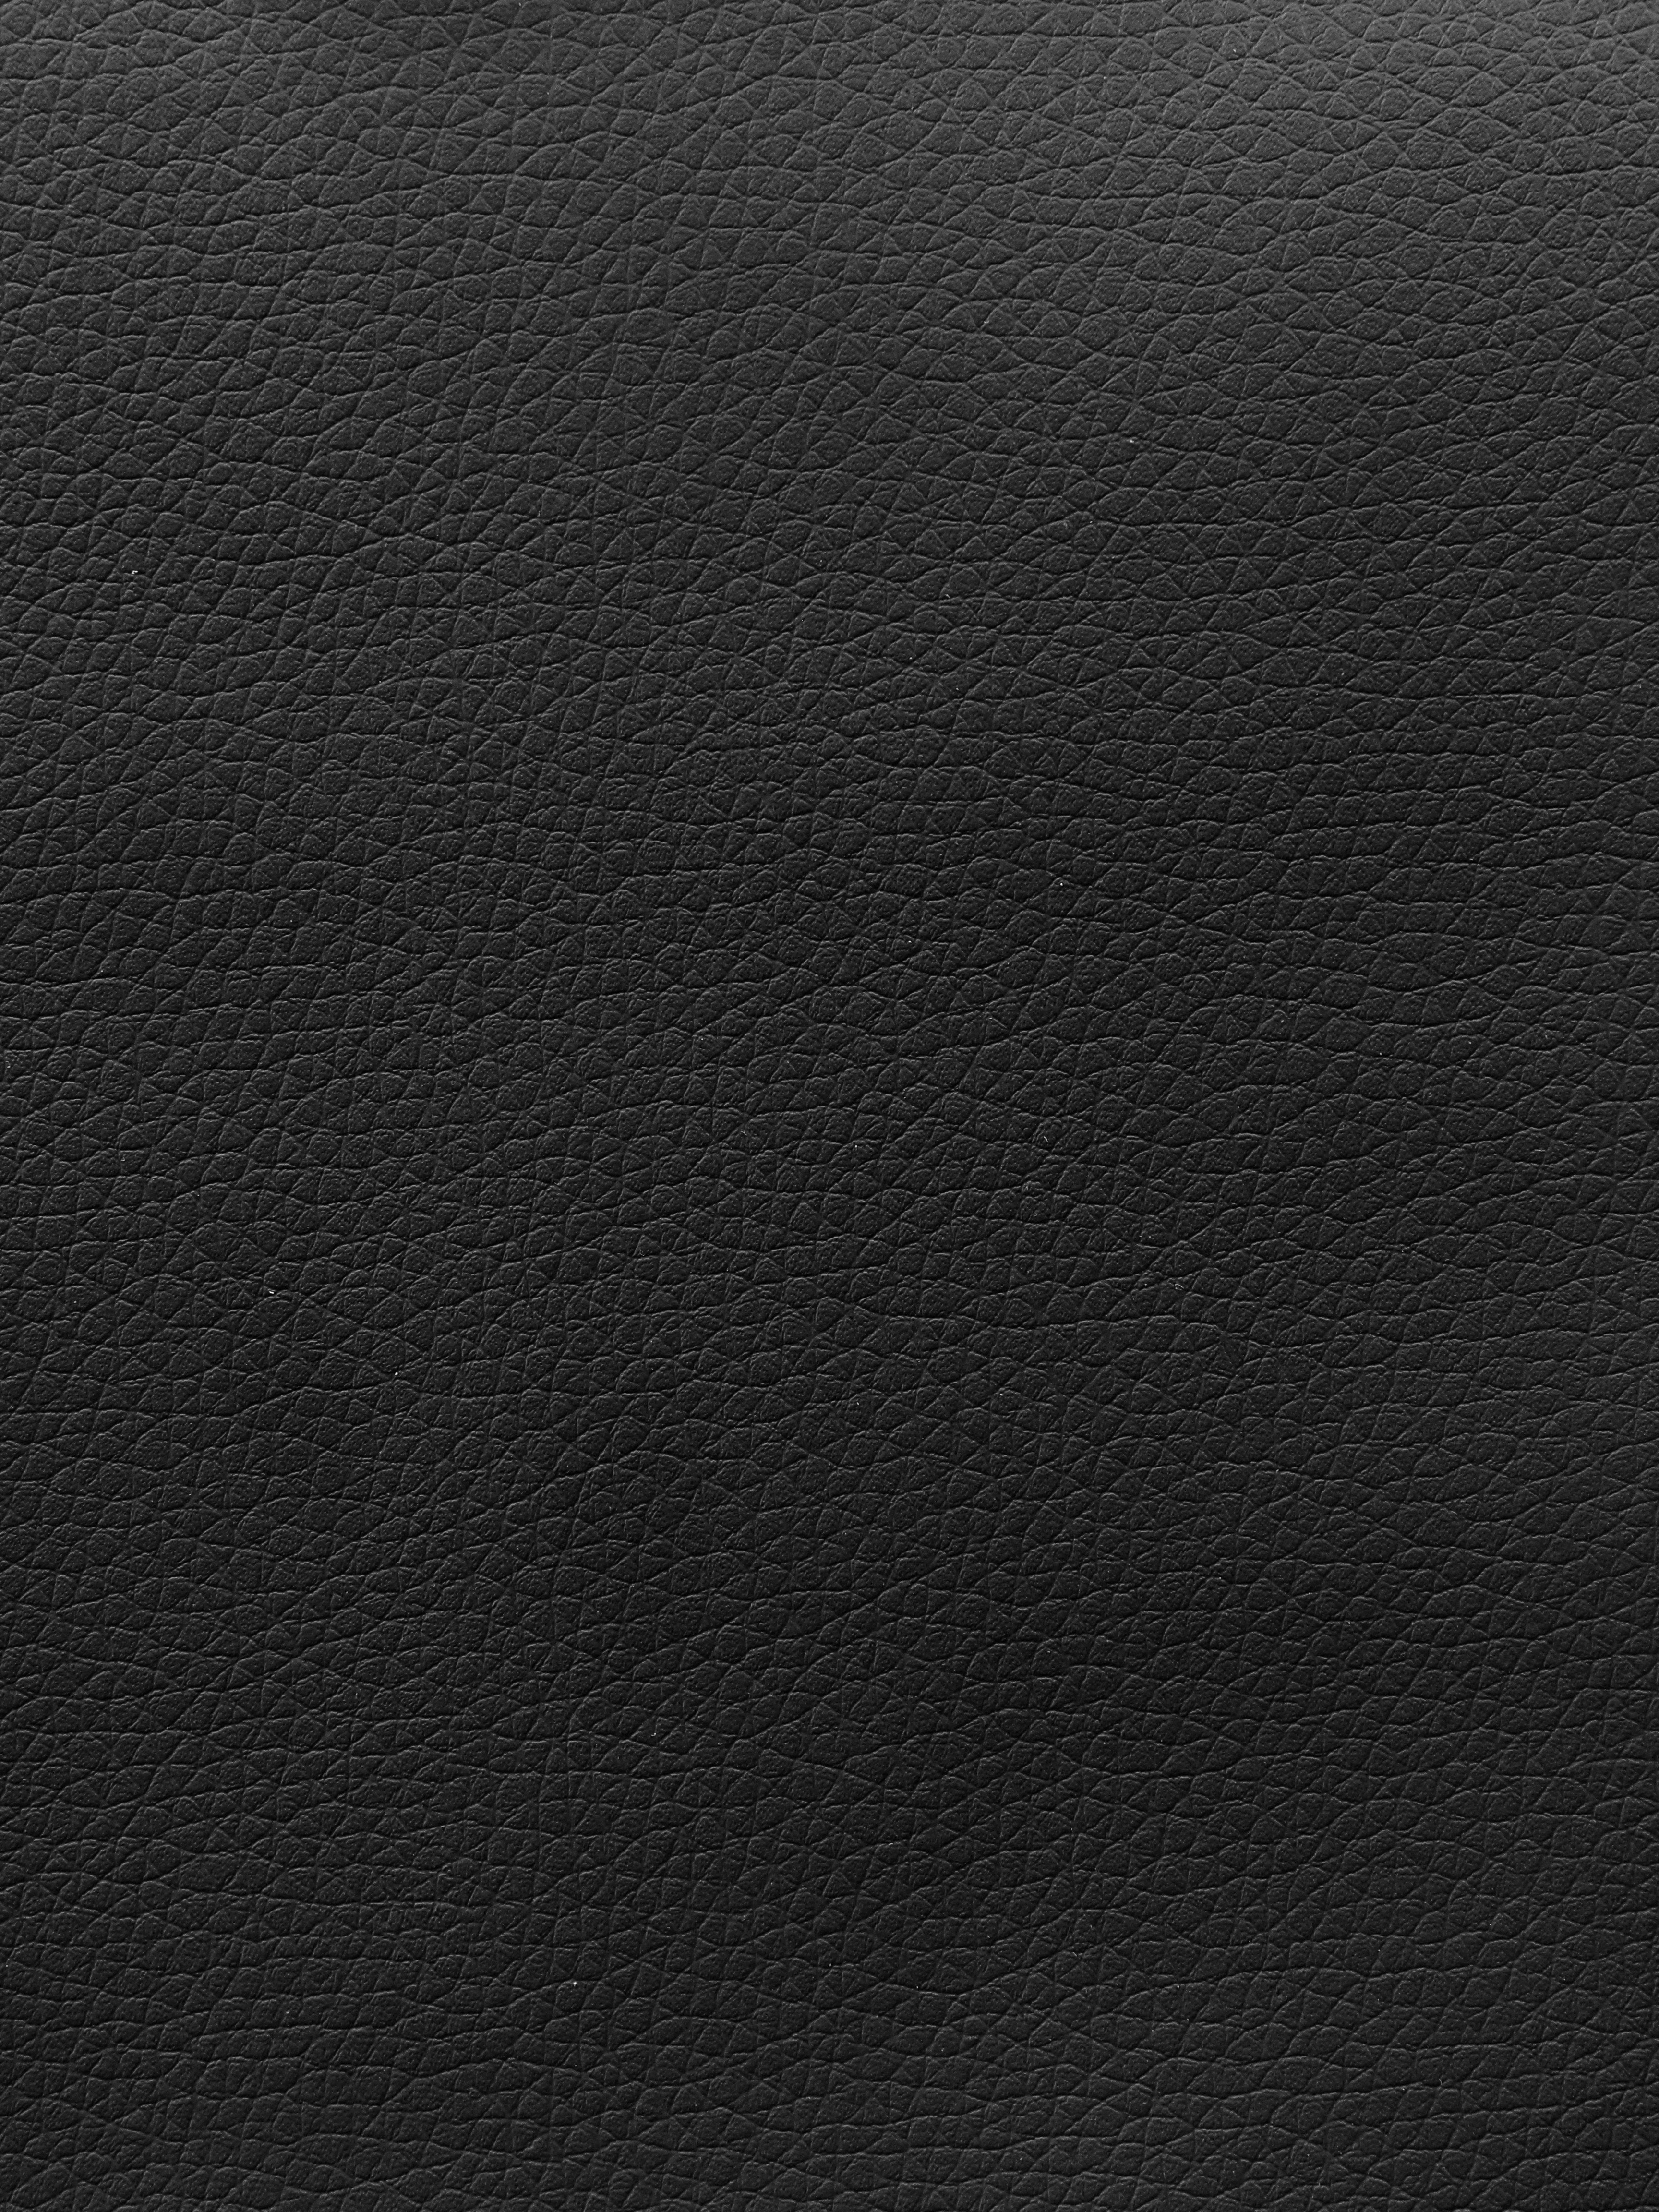 Leather Texture Dark Embossed Fabric Stock Photo Wallpaper Jpg